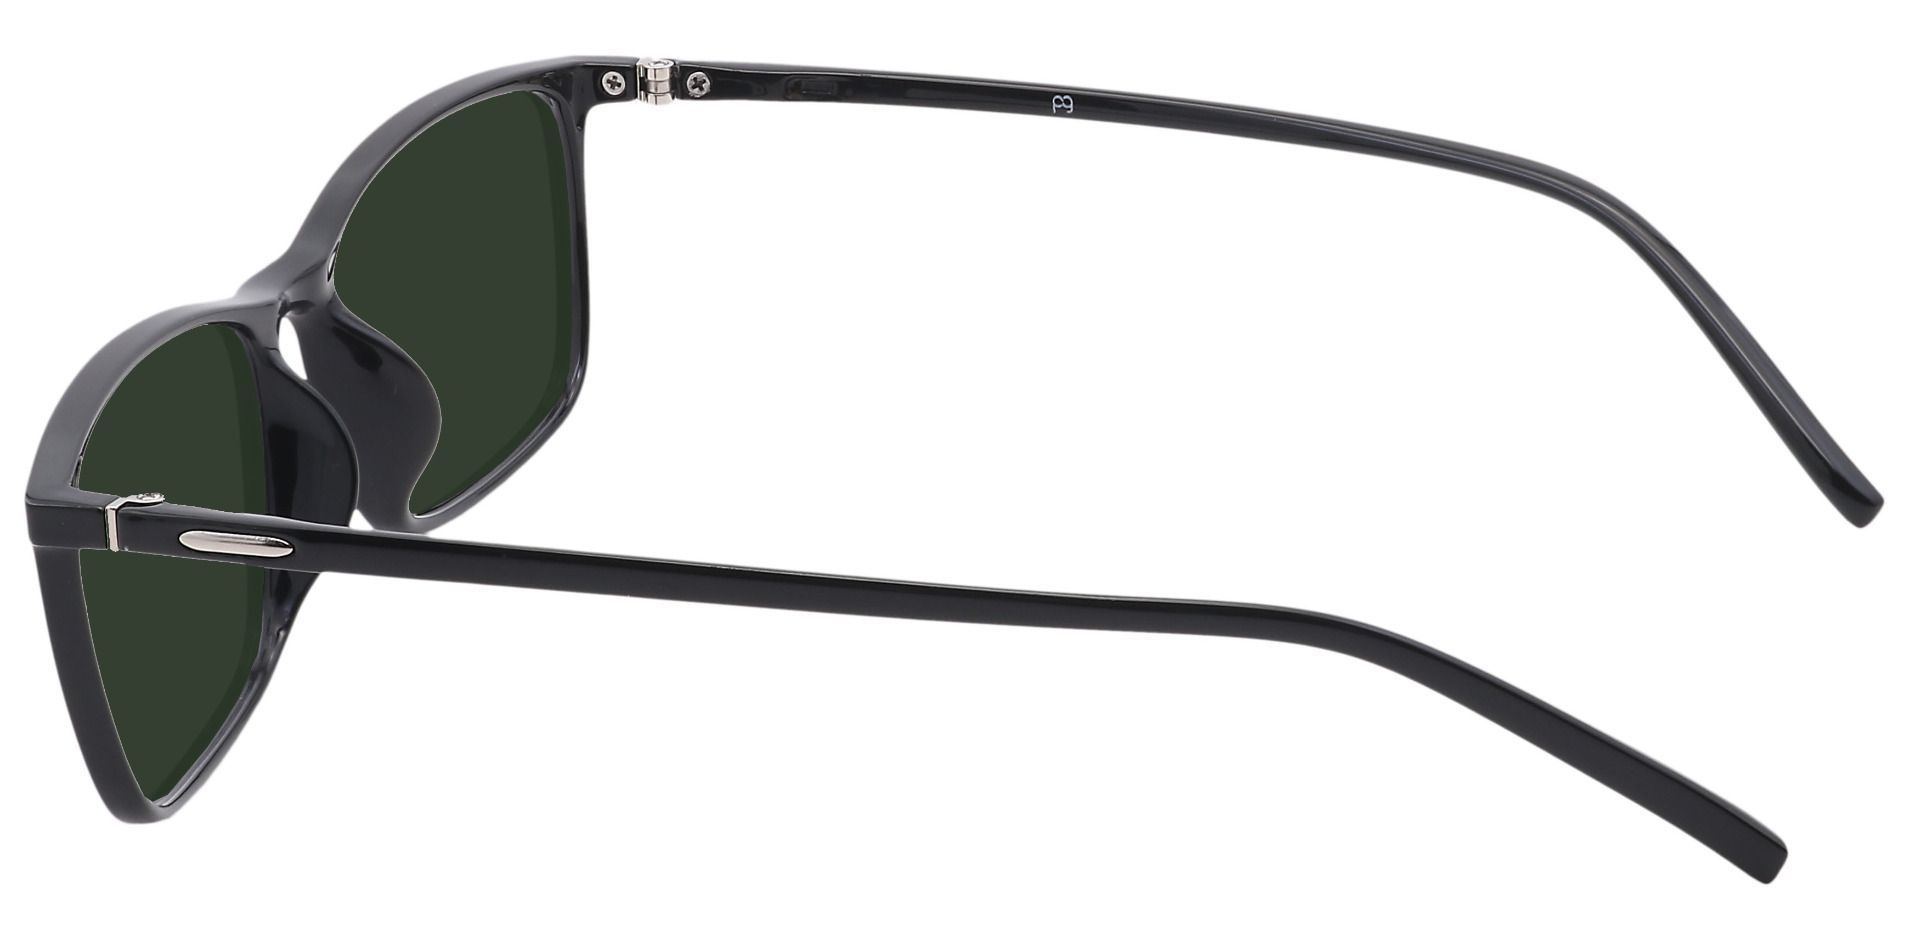 Fuji Rectangle Non-Rx Sunglasses - Black Frame With Green Lenses